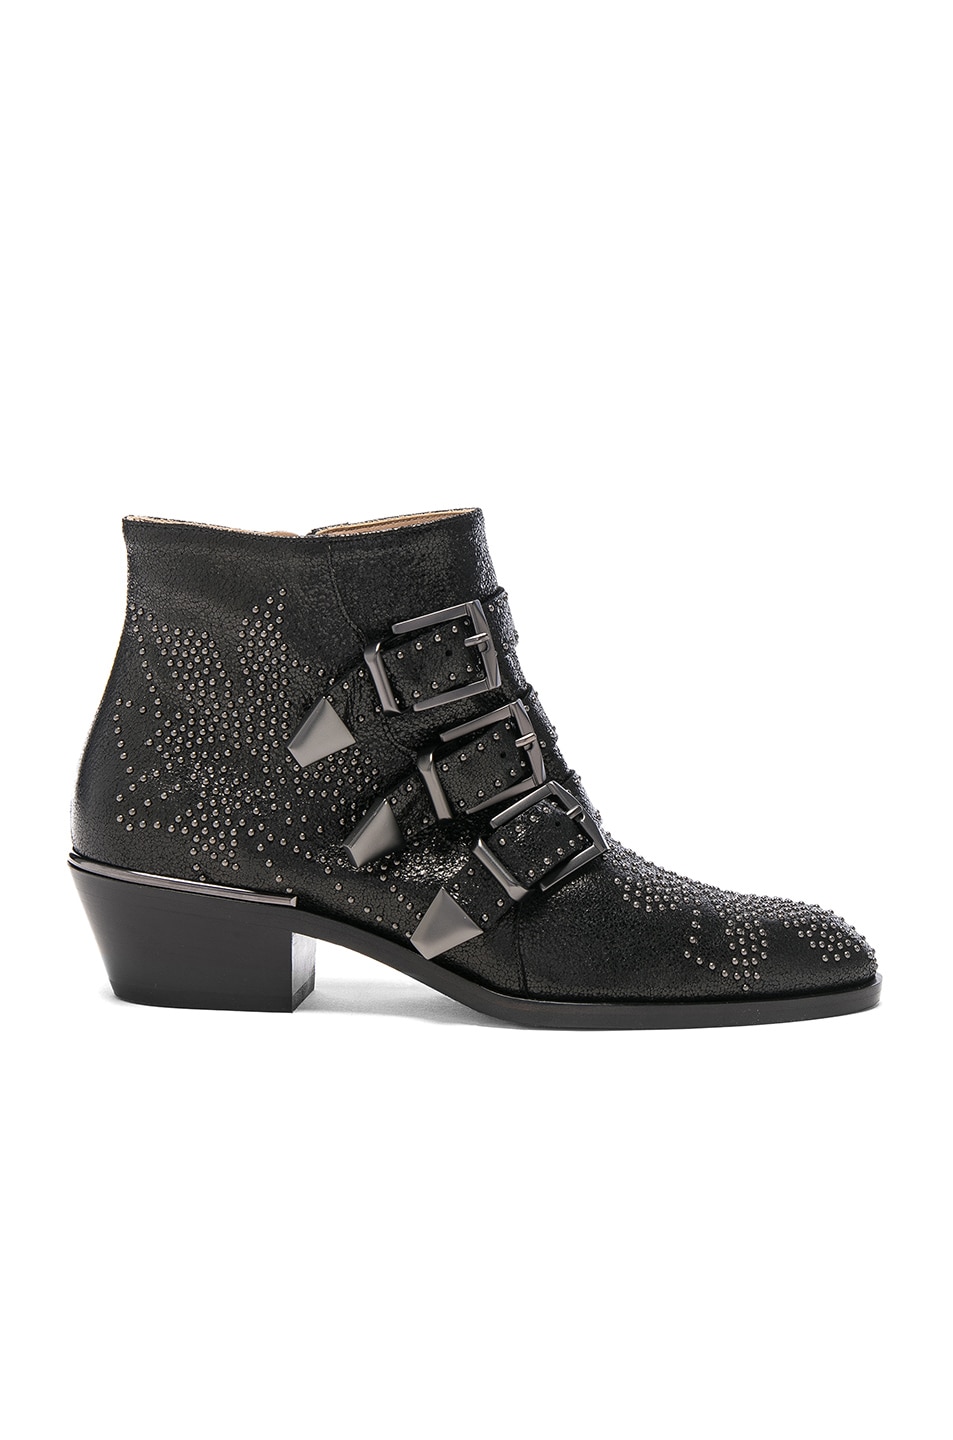 Image 1 of Chloe Susanna Metallic Leather Studded Booties in Black